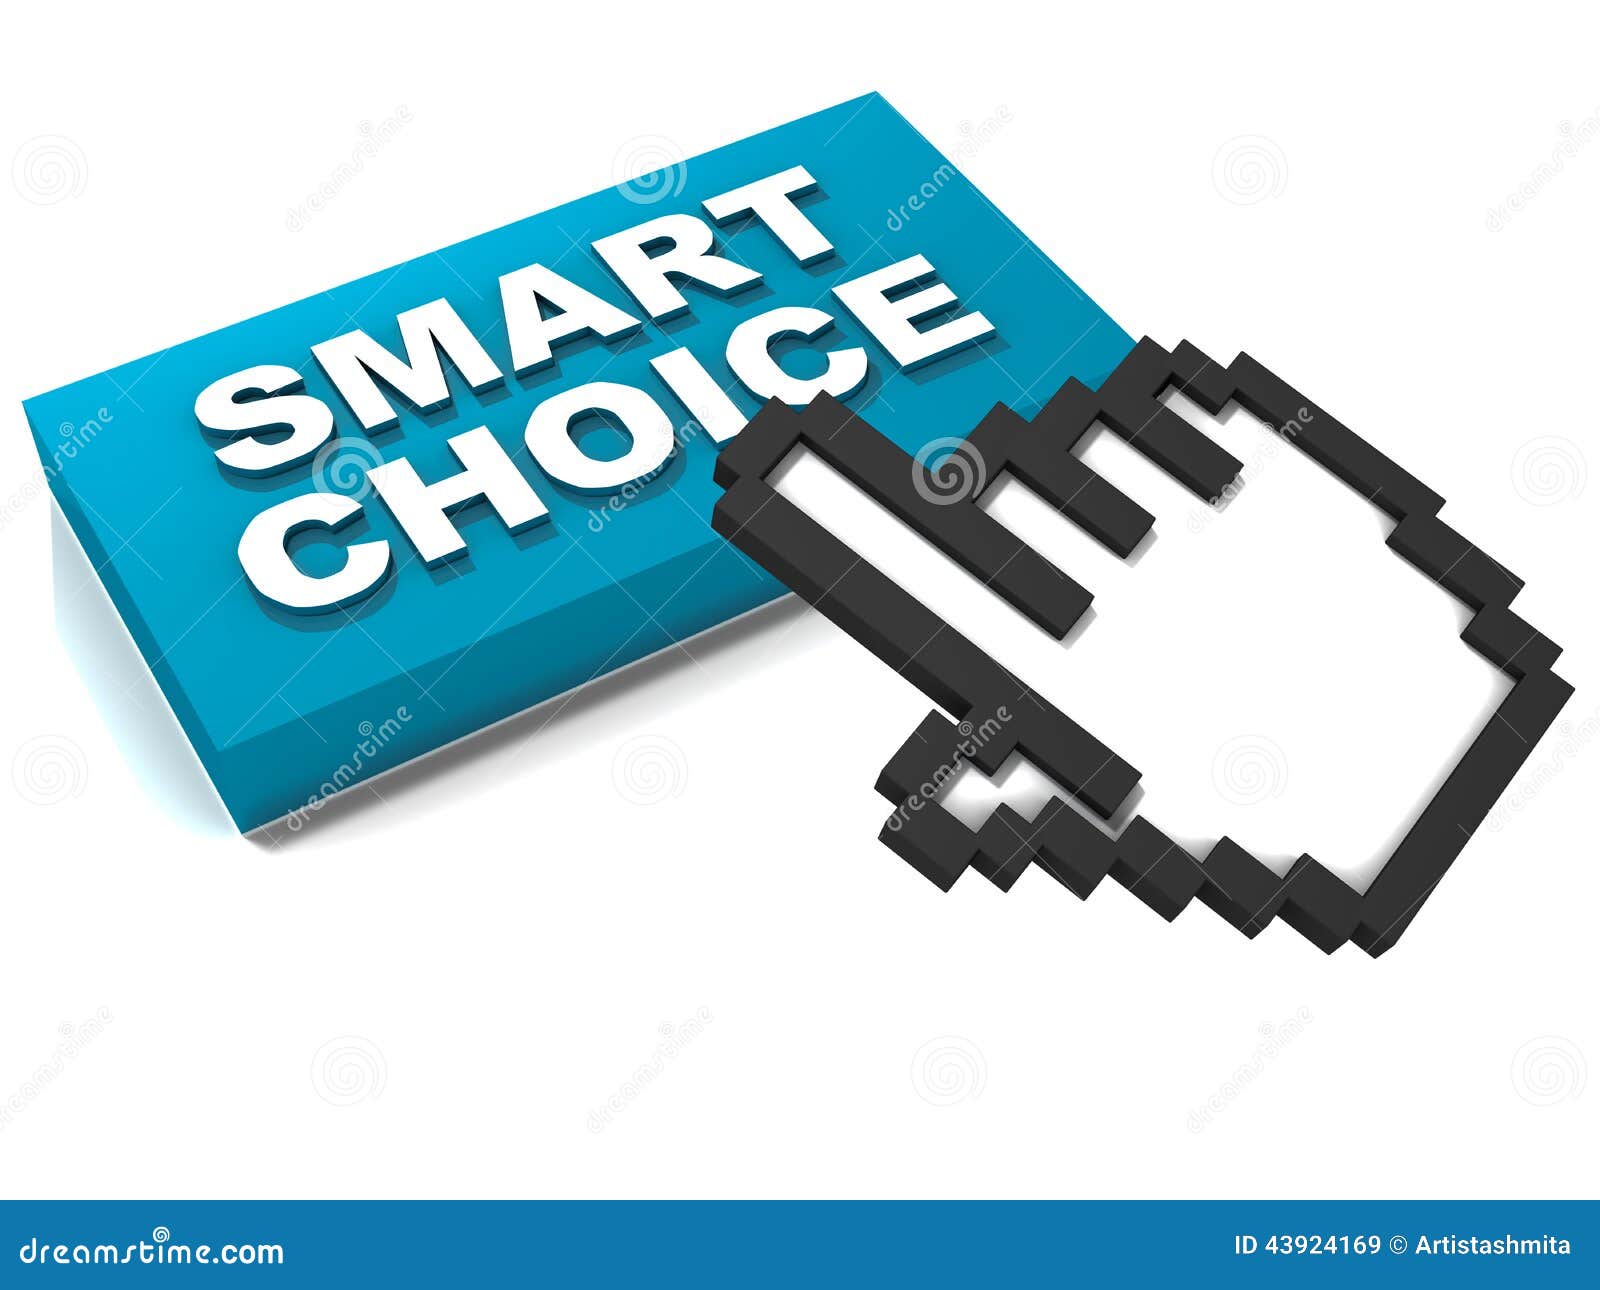 smart choice